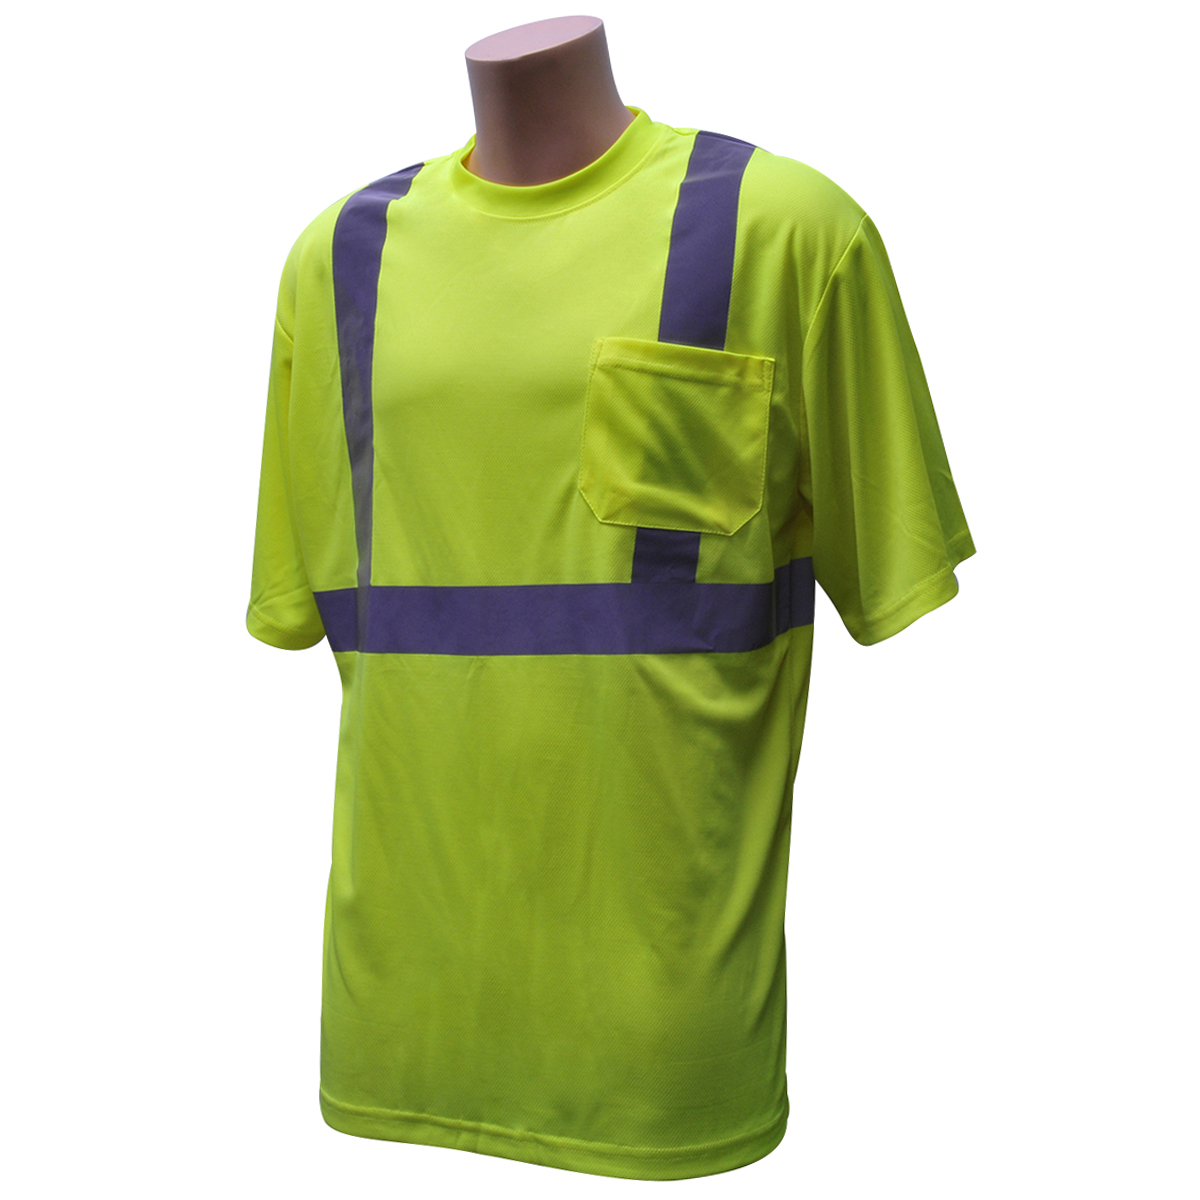 BlackCanyon Outfitters Short Sleeve Lime Pocket Reflective T-Shirt ANSI ISEA 107-2010 Class 2-Size XL